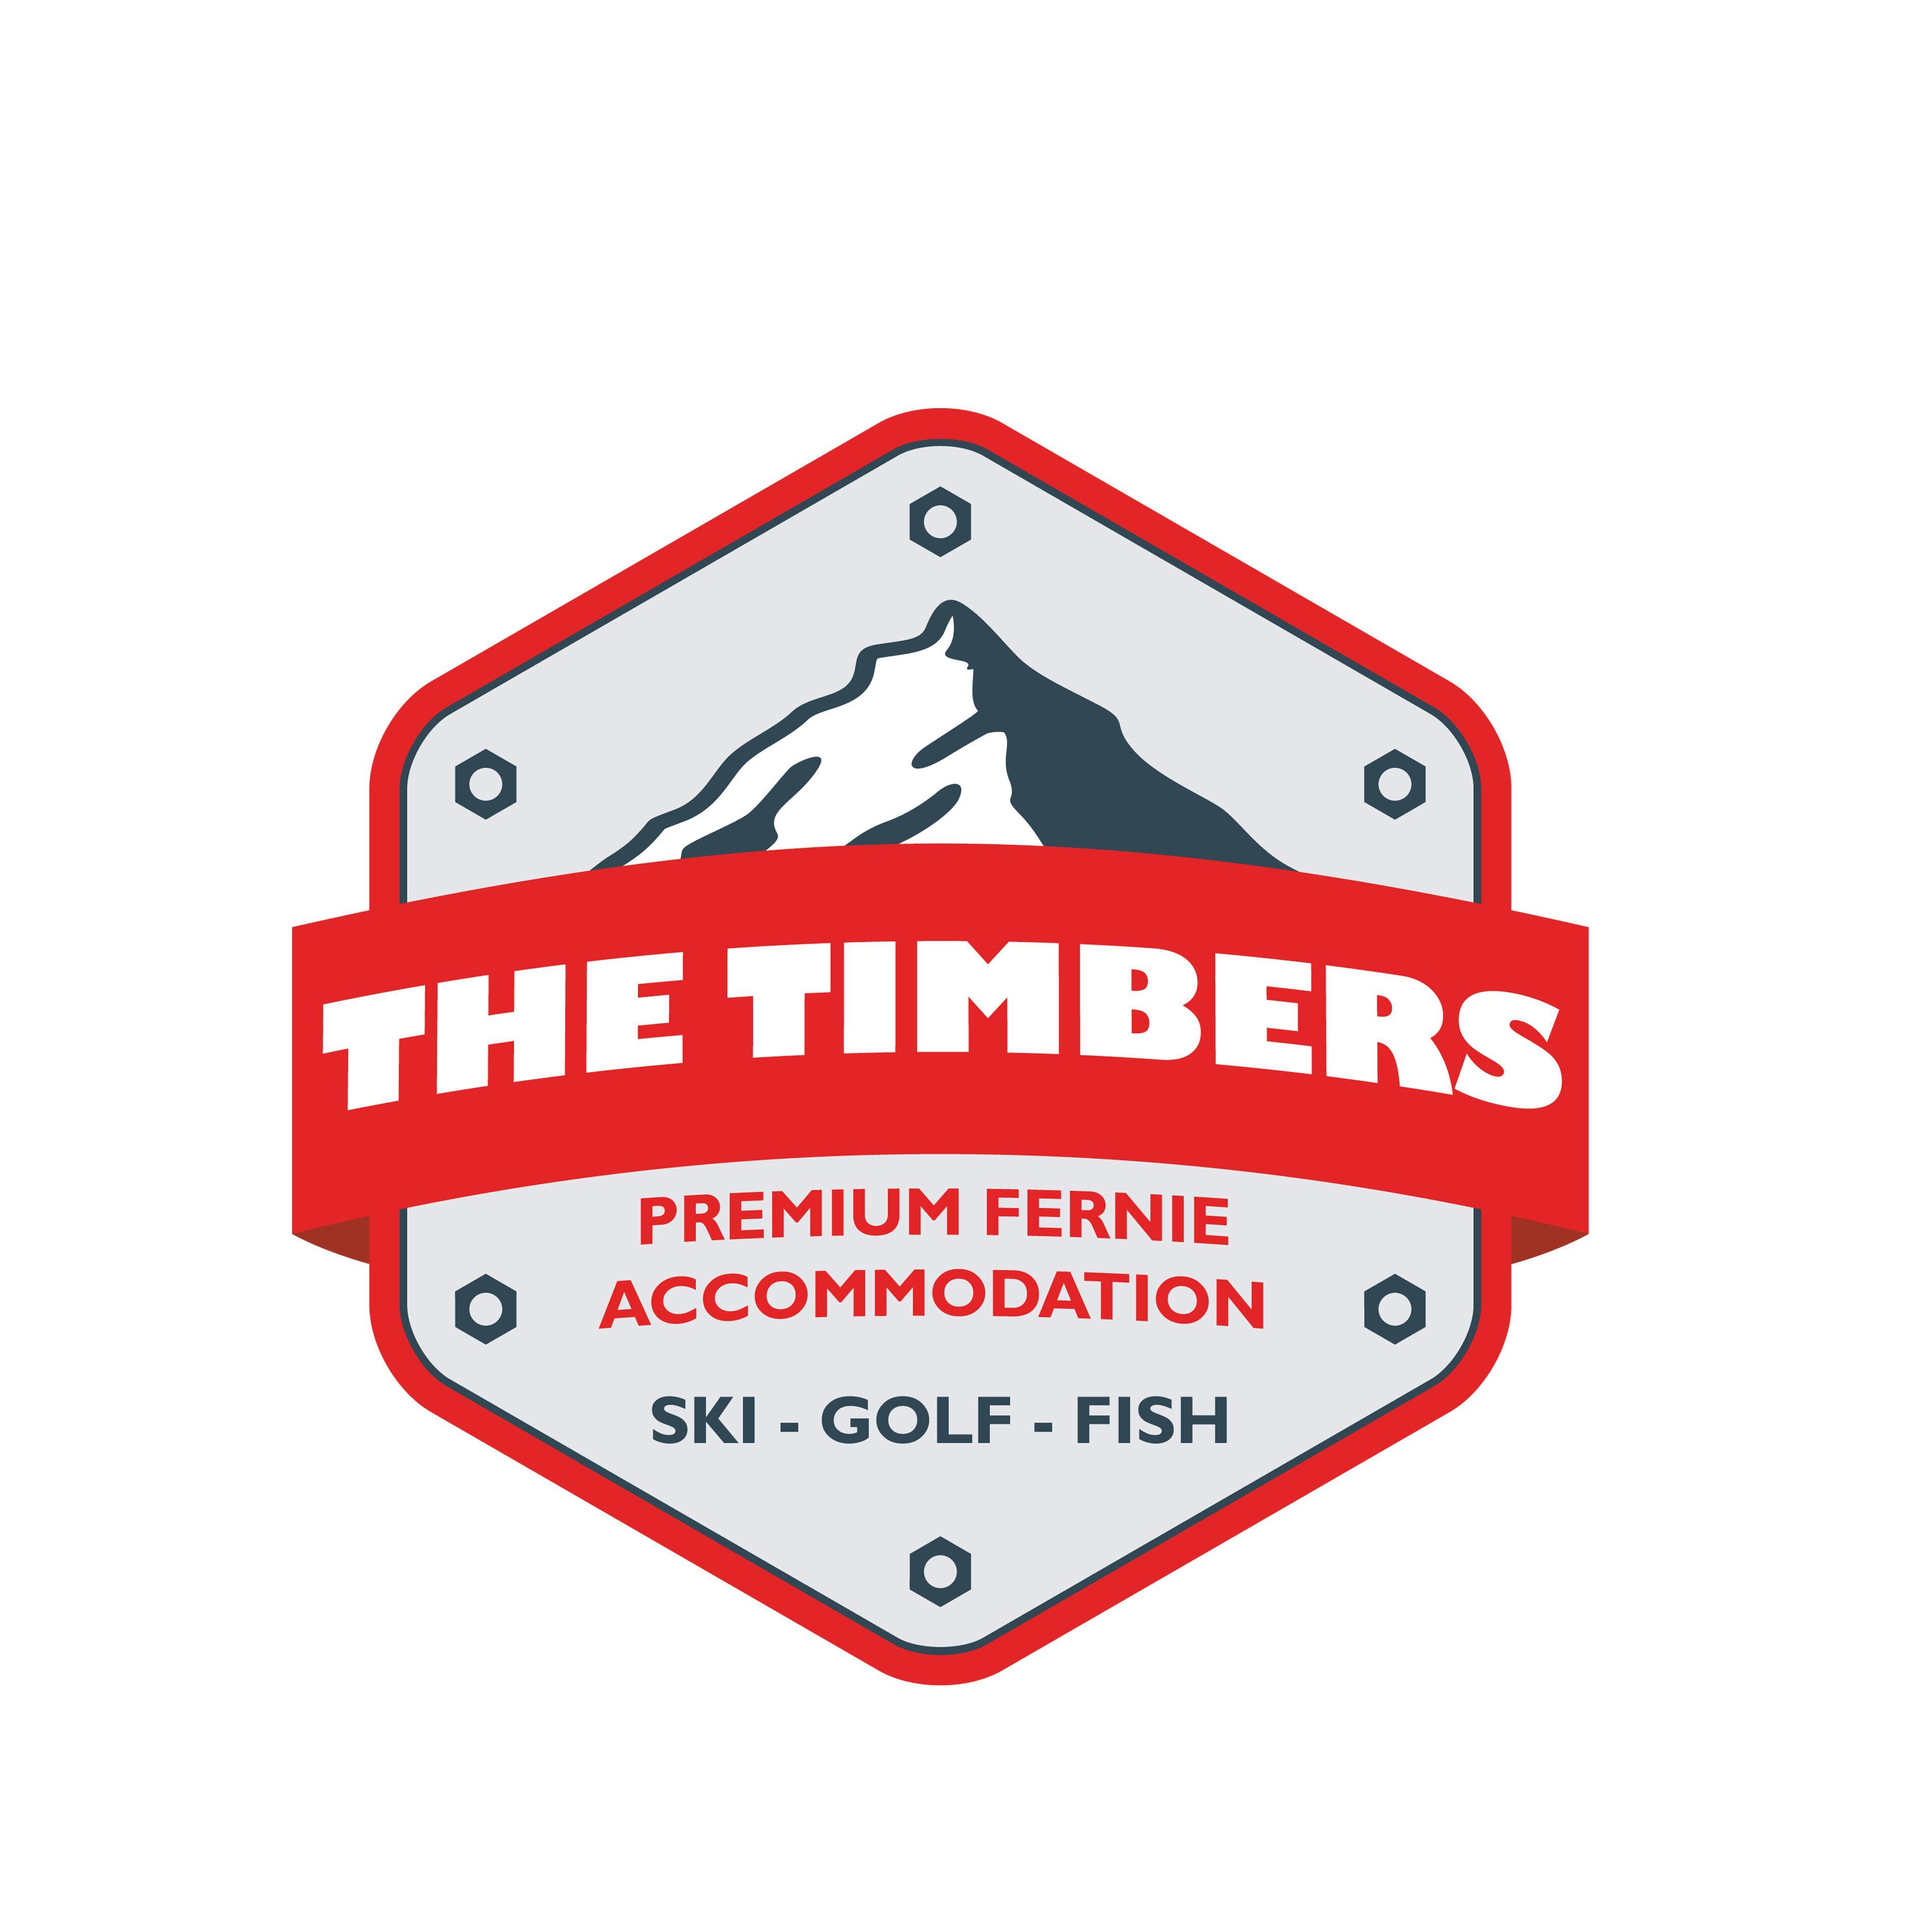 Fernie Logo - The Timbers Lodge | The Timbers